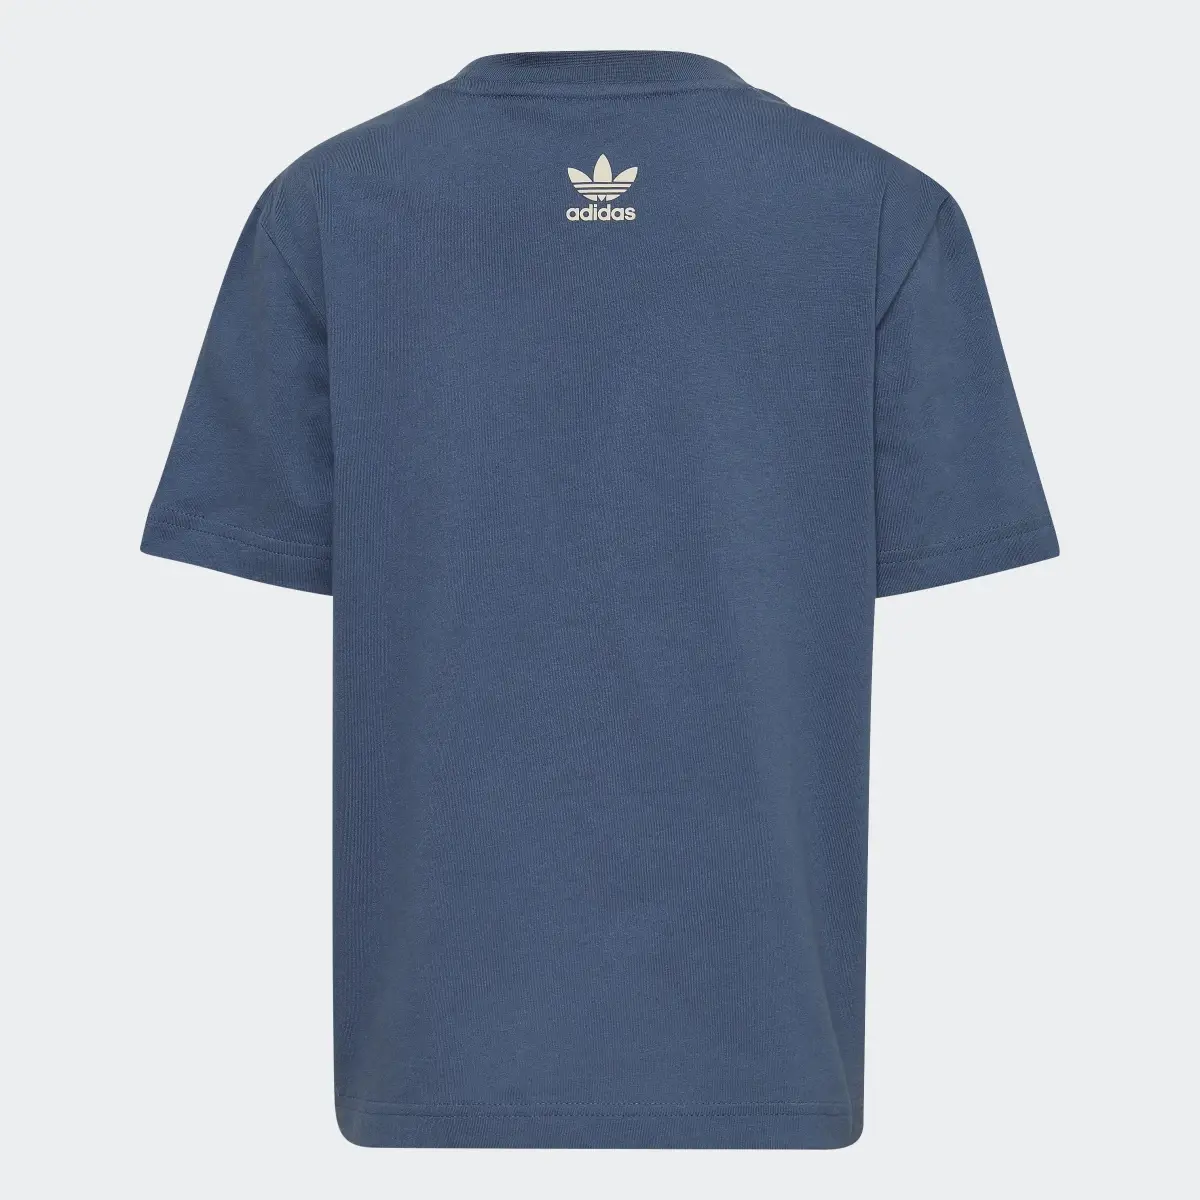 Adidas Graphic T-Shirt. 2